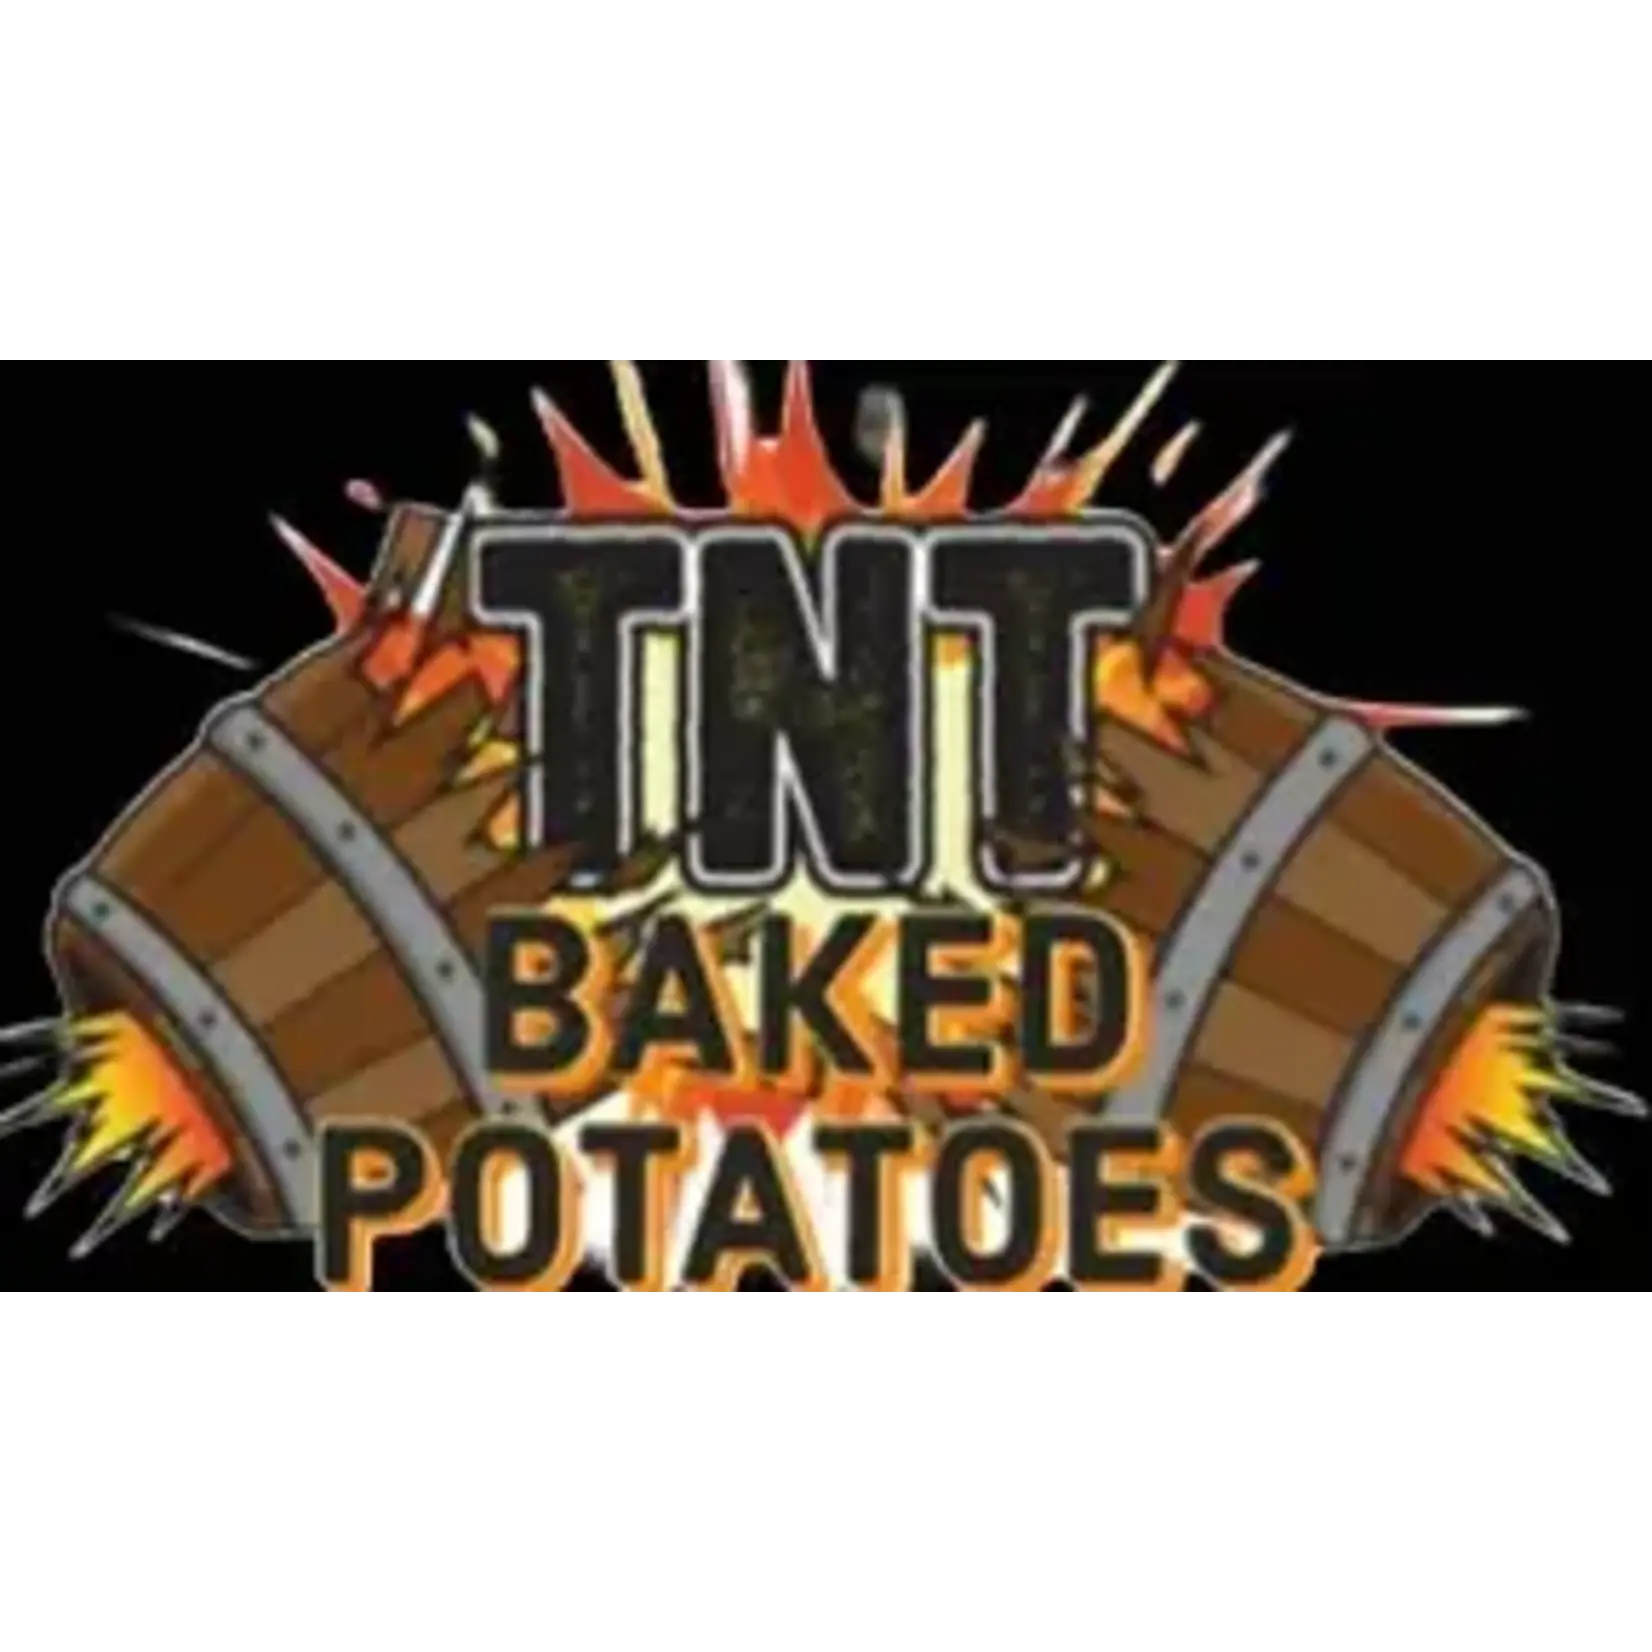 TNT Baked Potatoes TNT Baked Potatoes (Mobile Vendor) - $20 Value Menu items